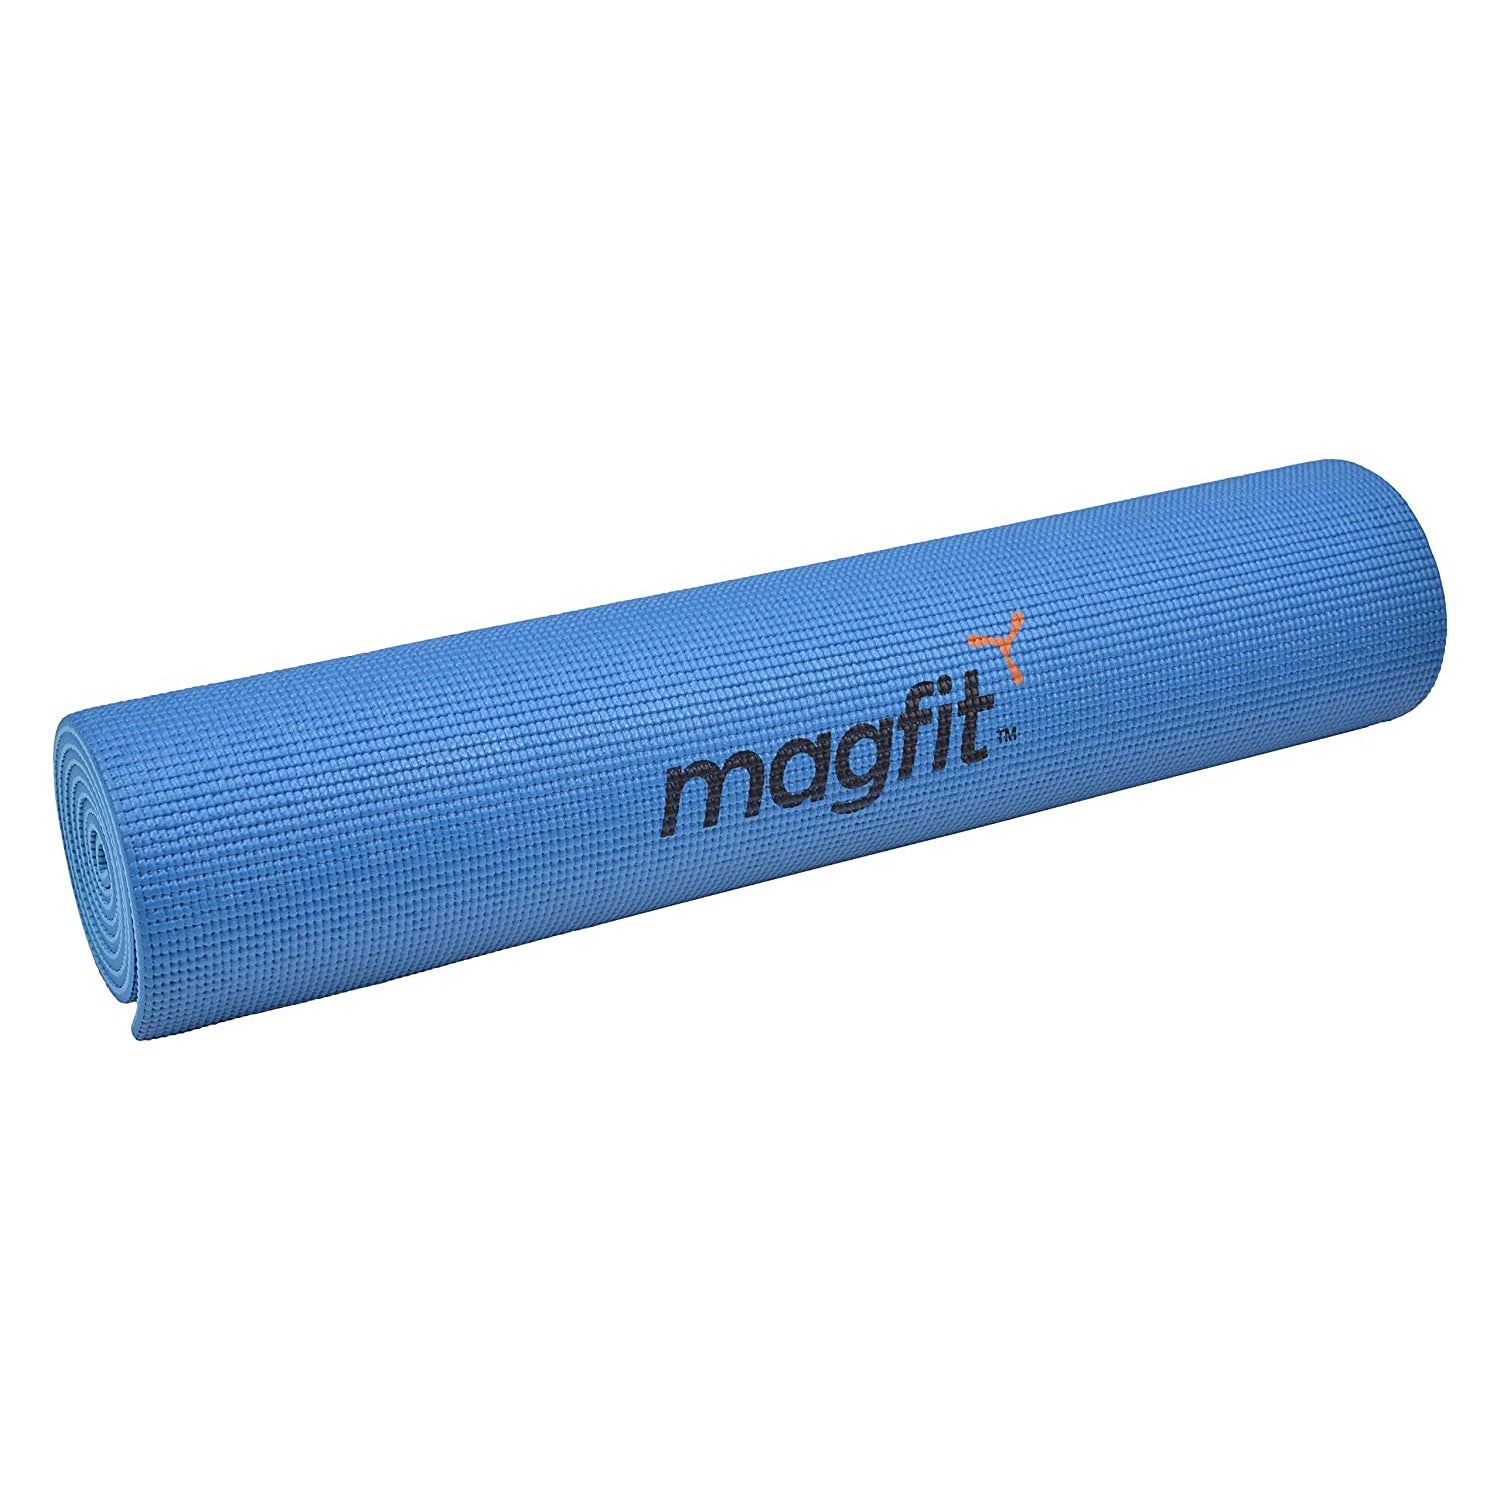 MAGFIT Double Sided Yoga MAT 6 MM - Best Price online Prokicksports.com